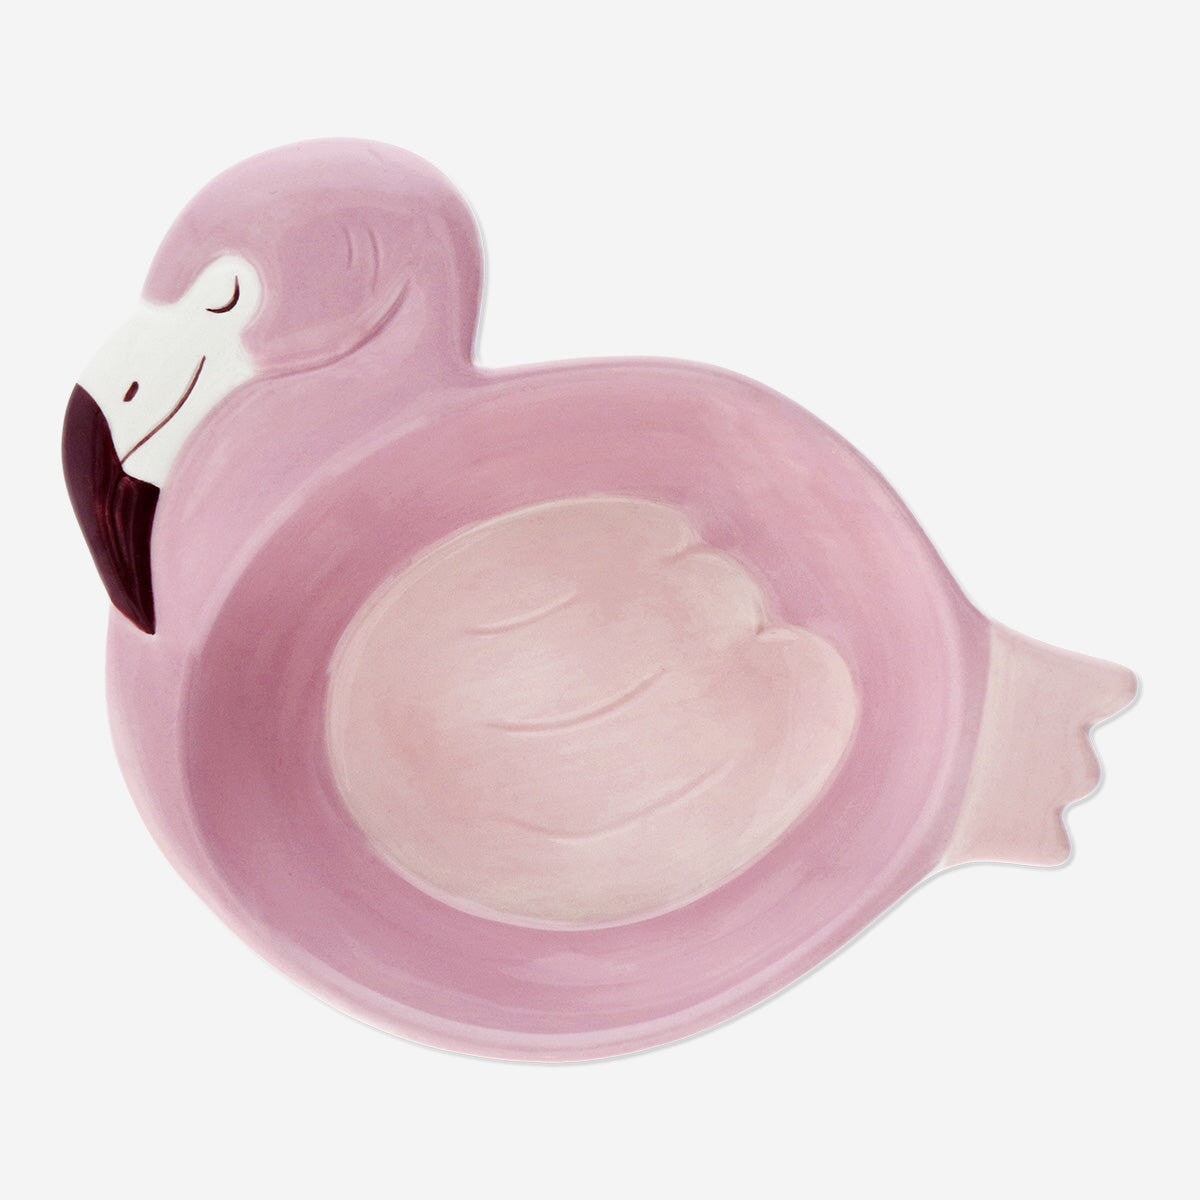 Image of Flamingo bowl. Small